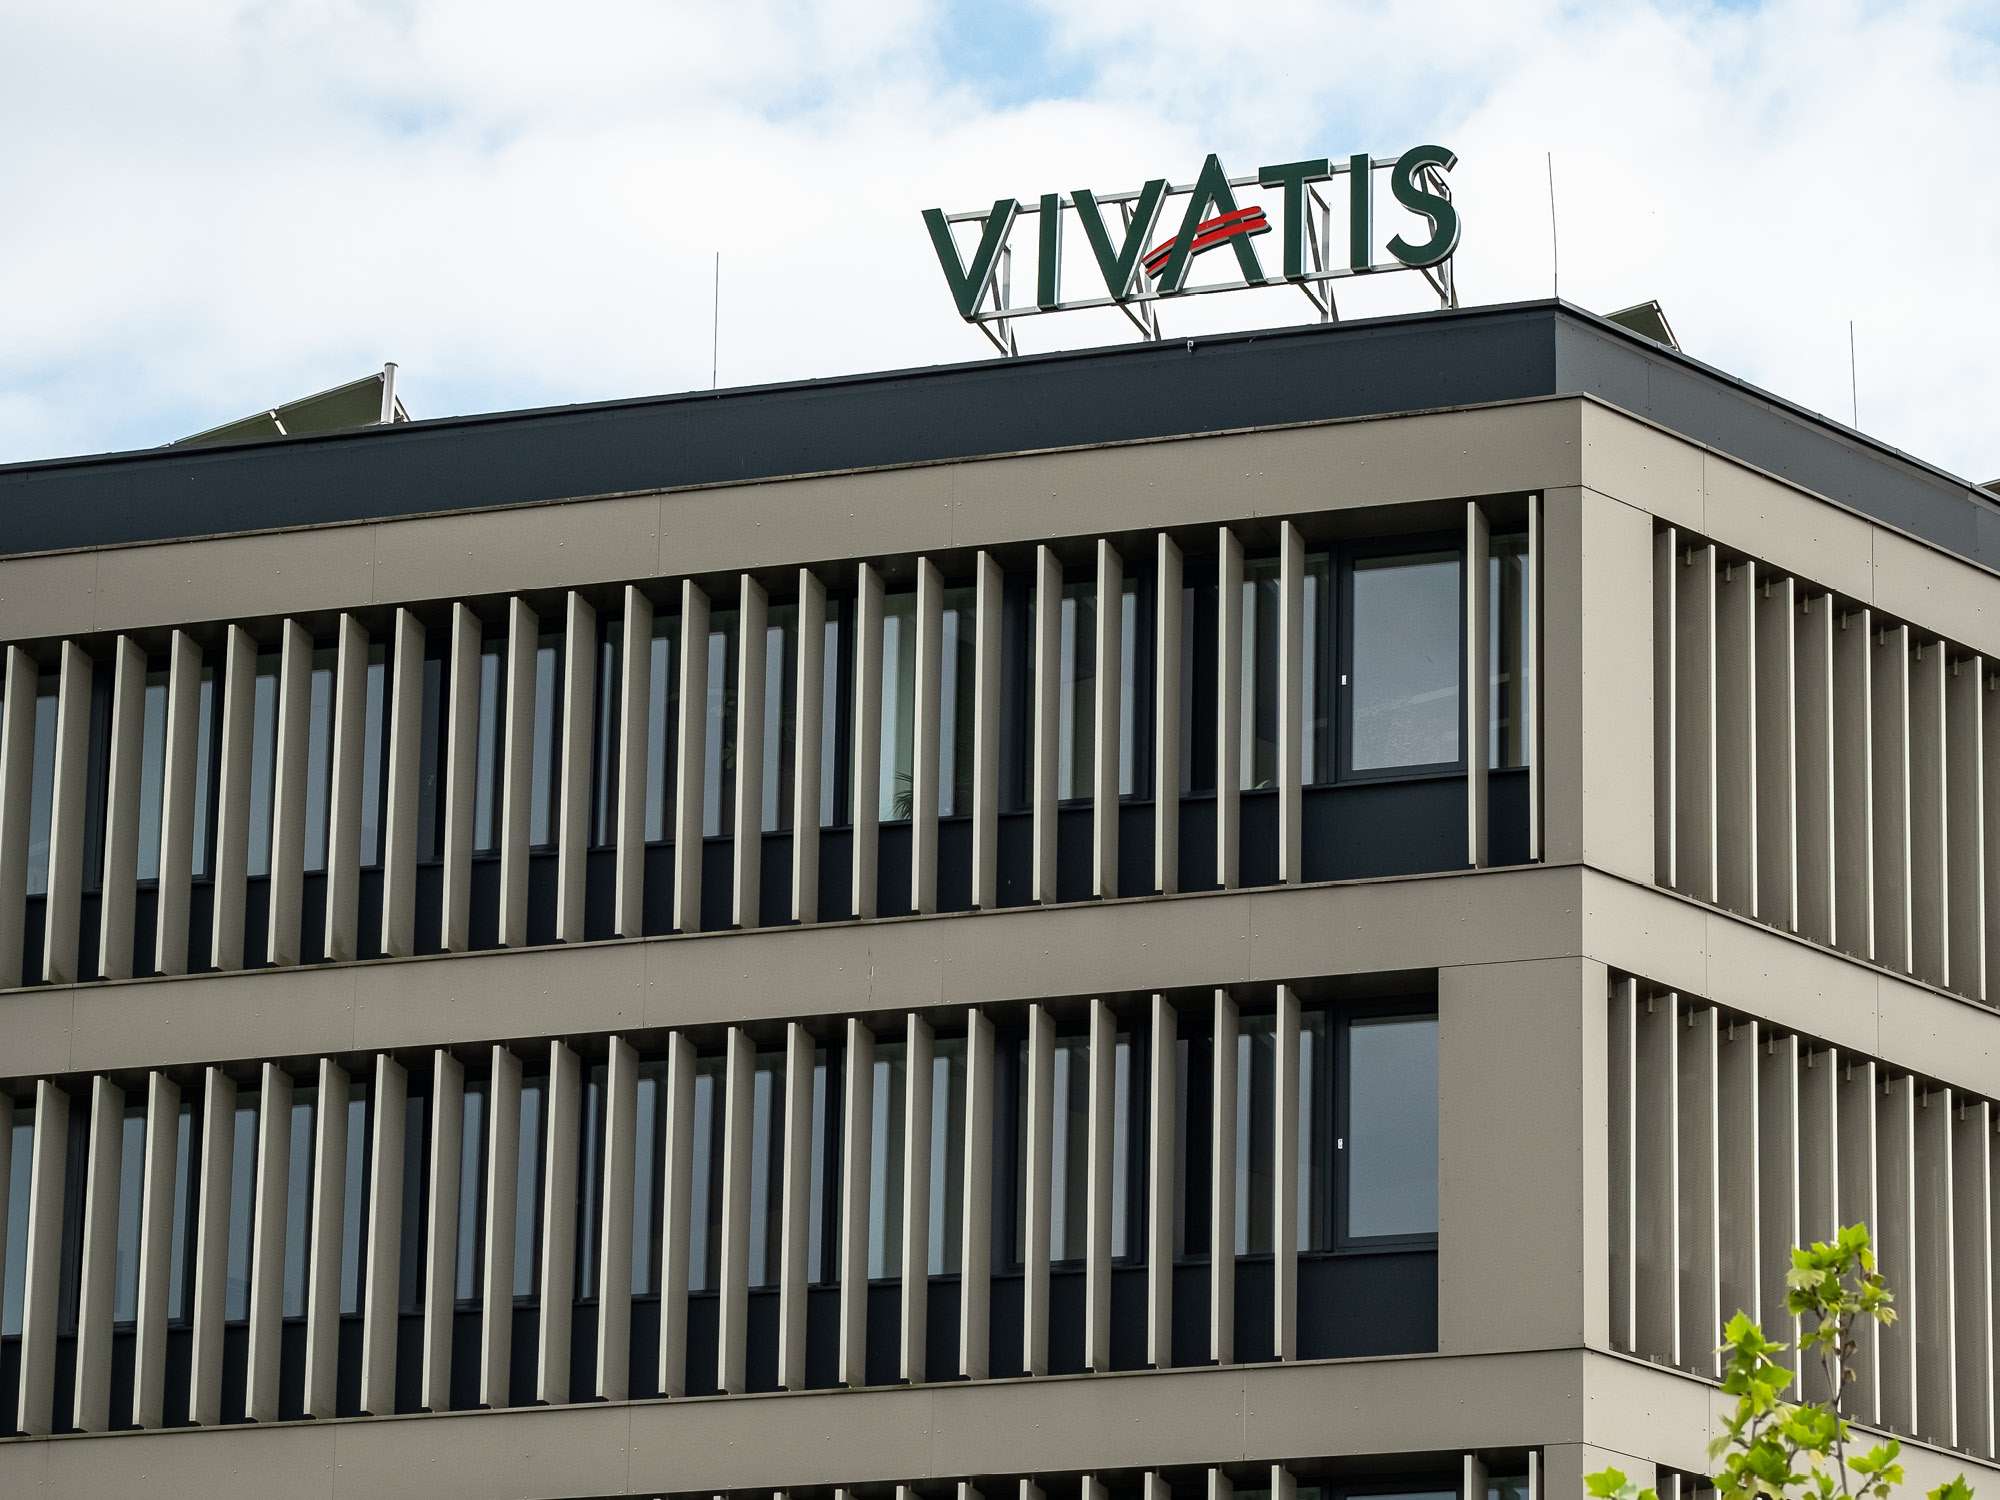 VIVATIS – the strategic management holding based in Linz